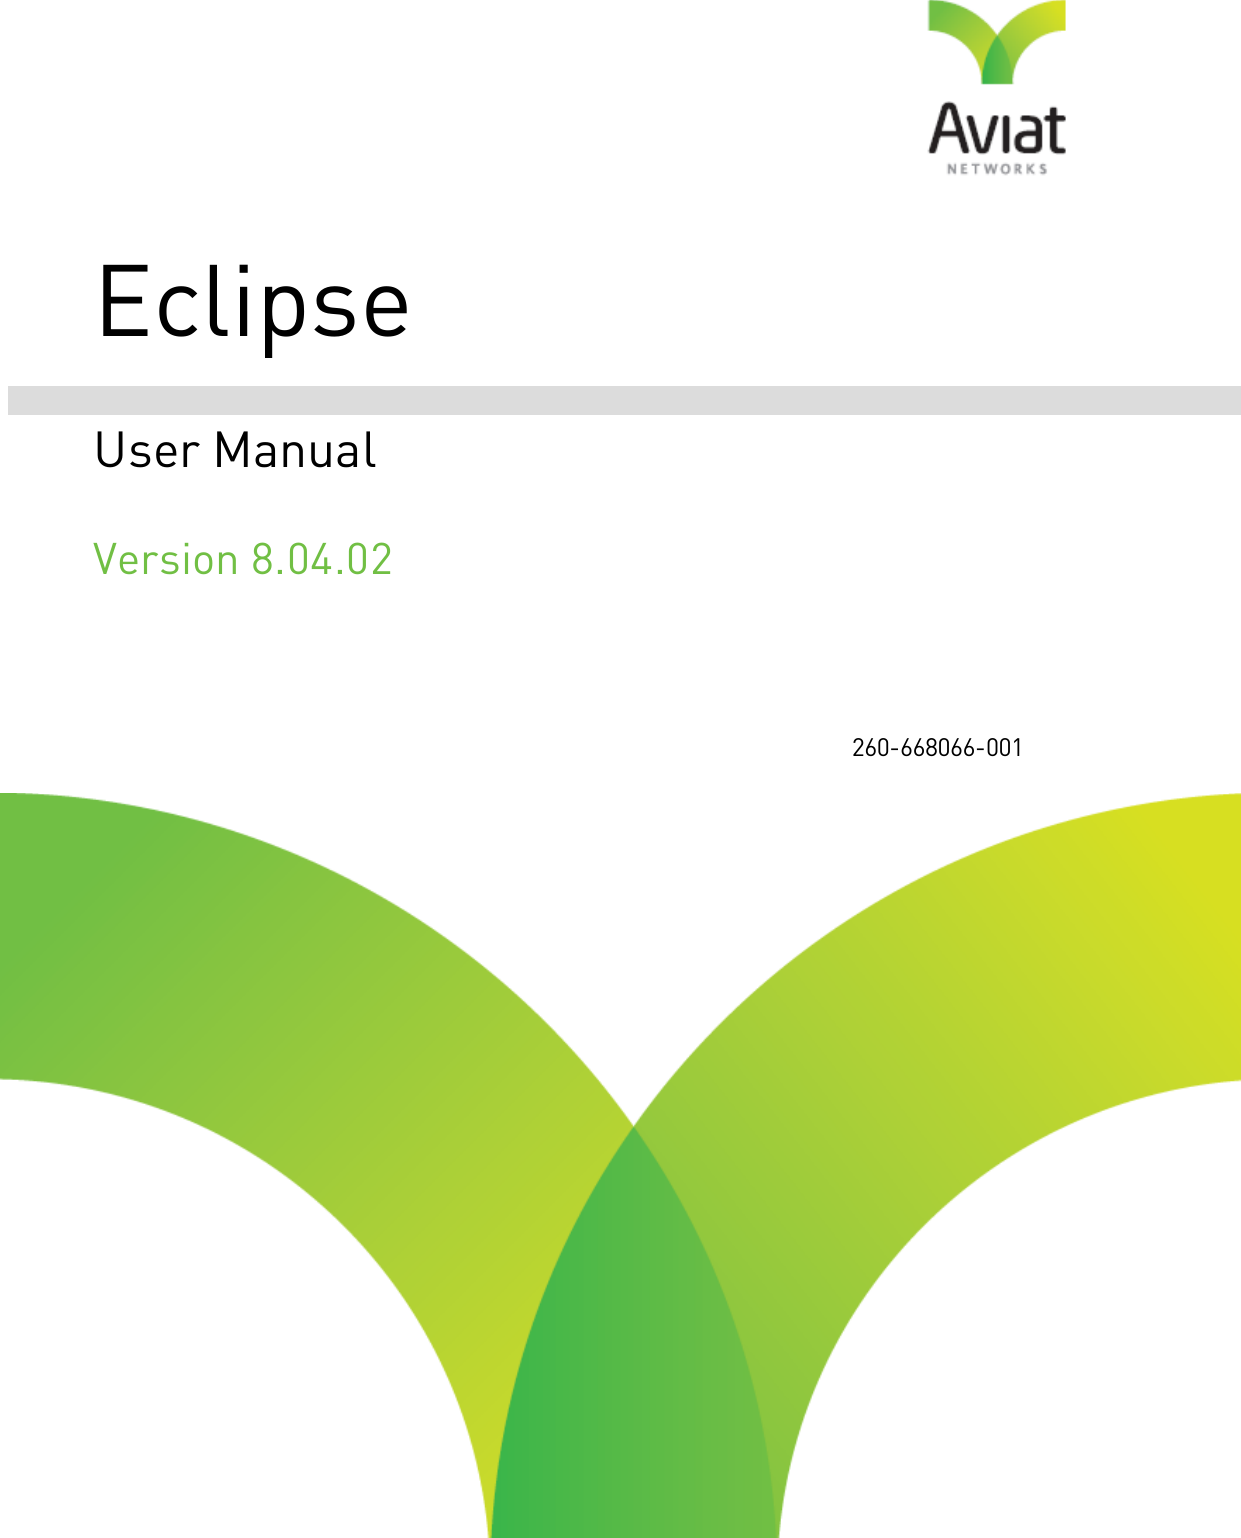 EclipseUser ManualVersion 8.04.02260-668066-001